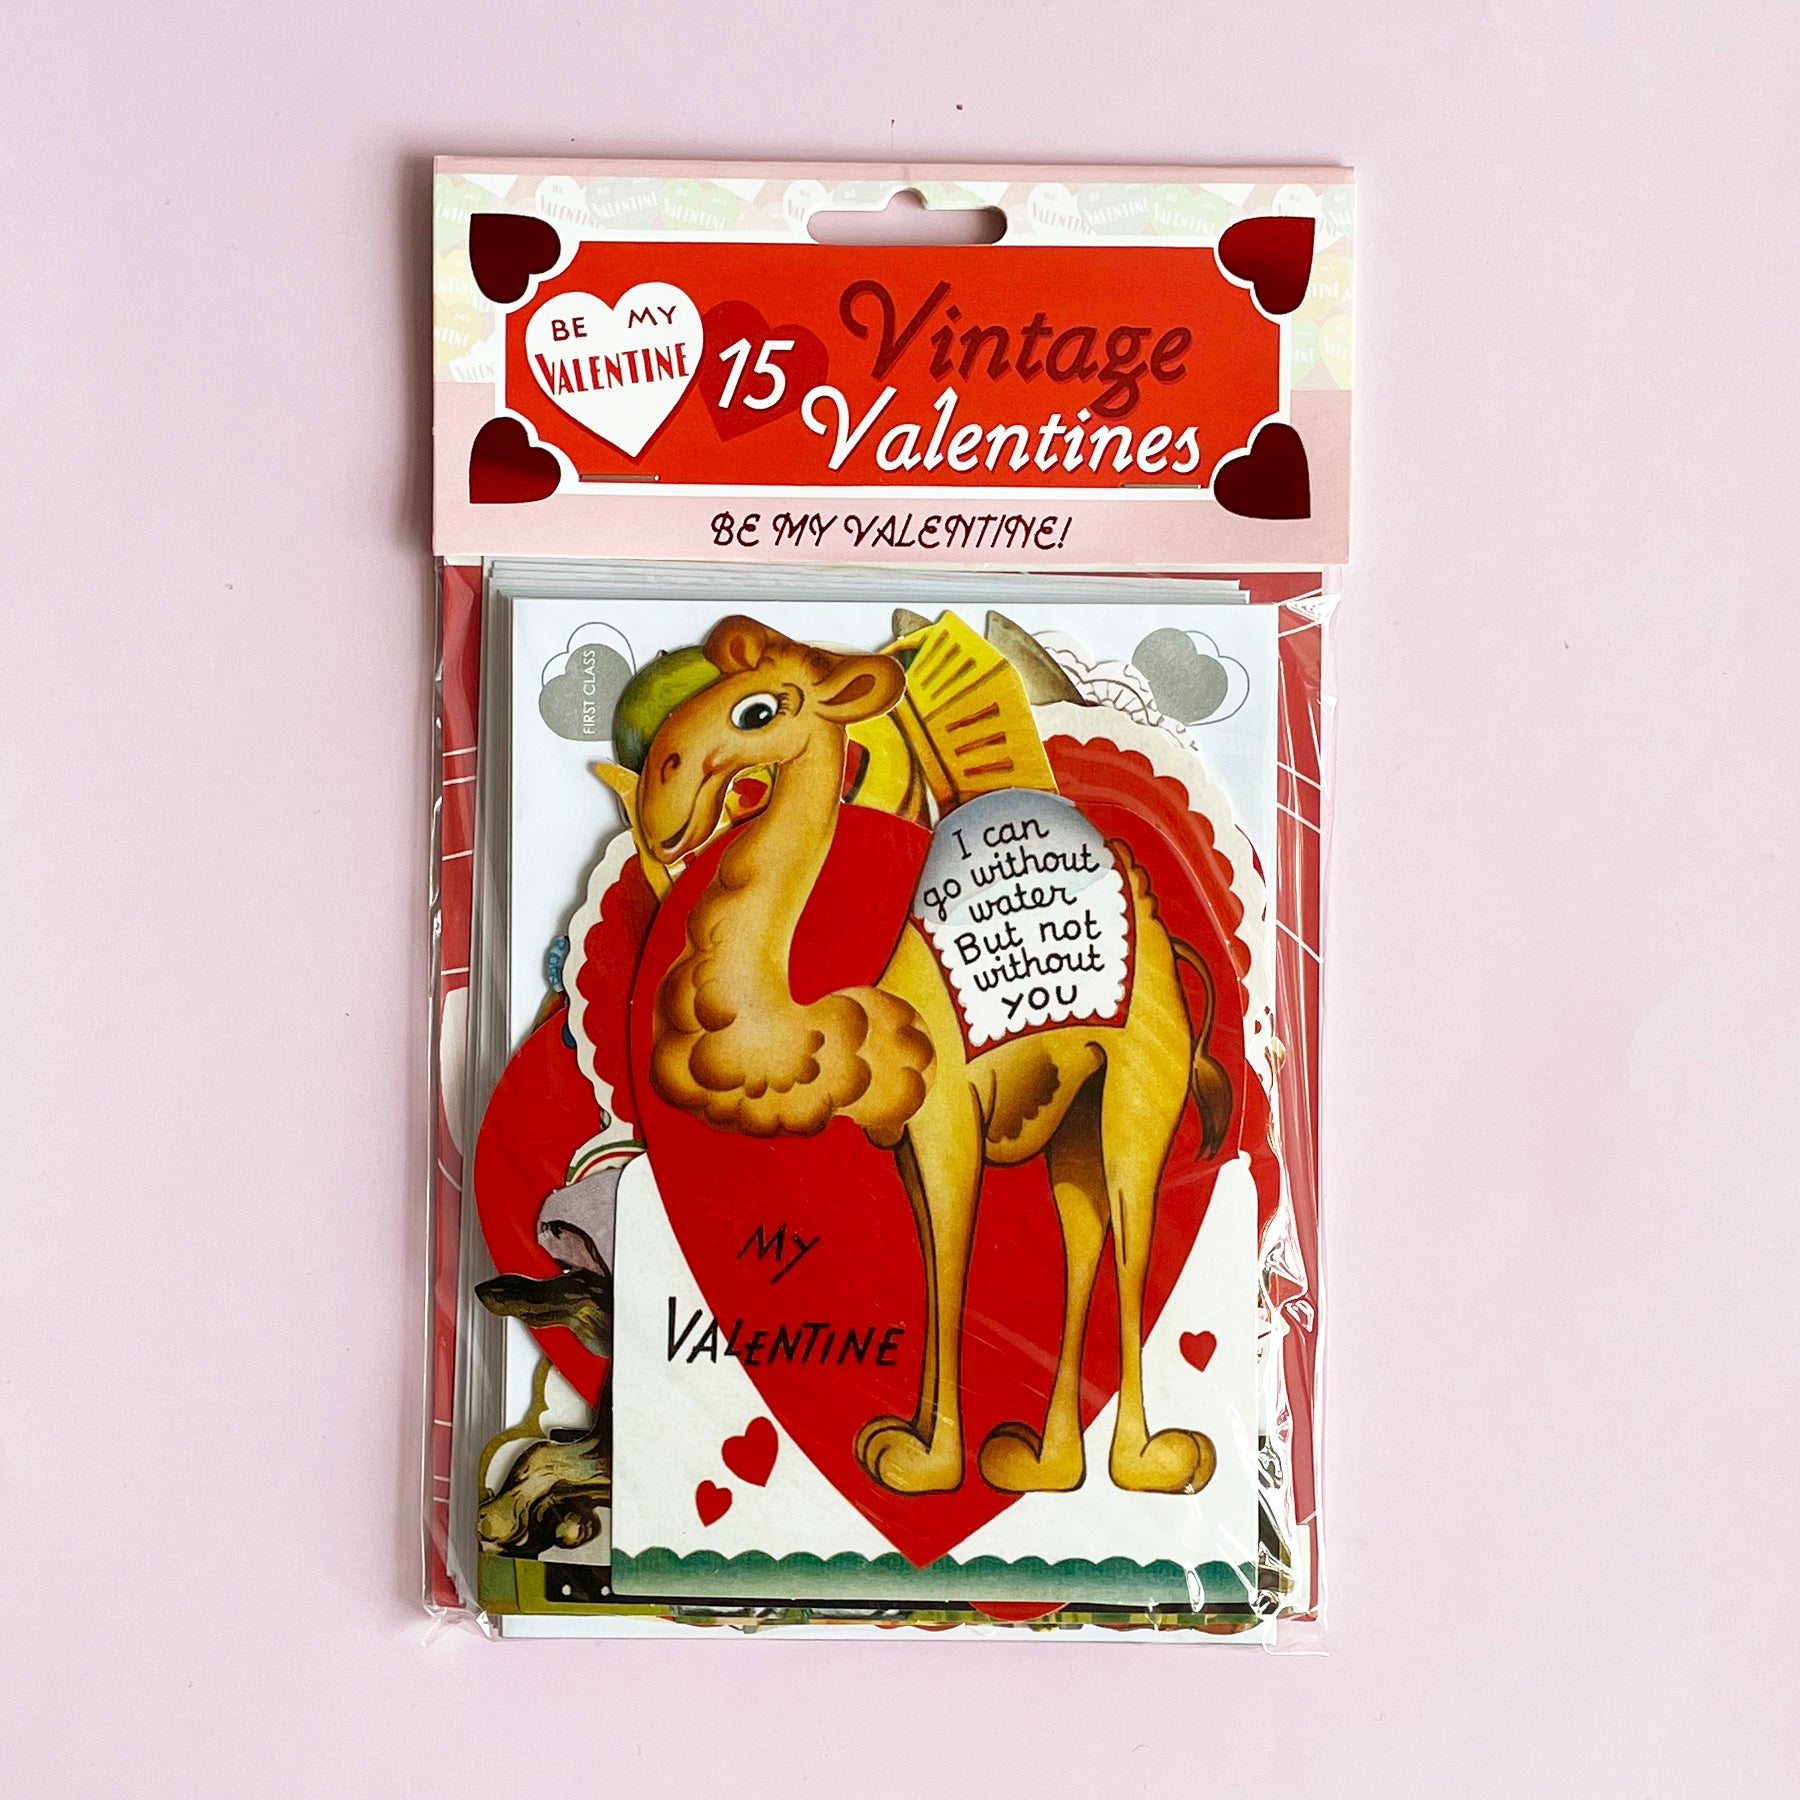 15 Vintage Valentines: Retro Valentines